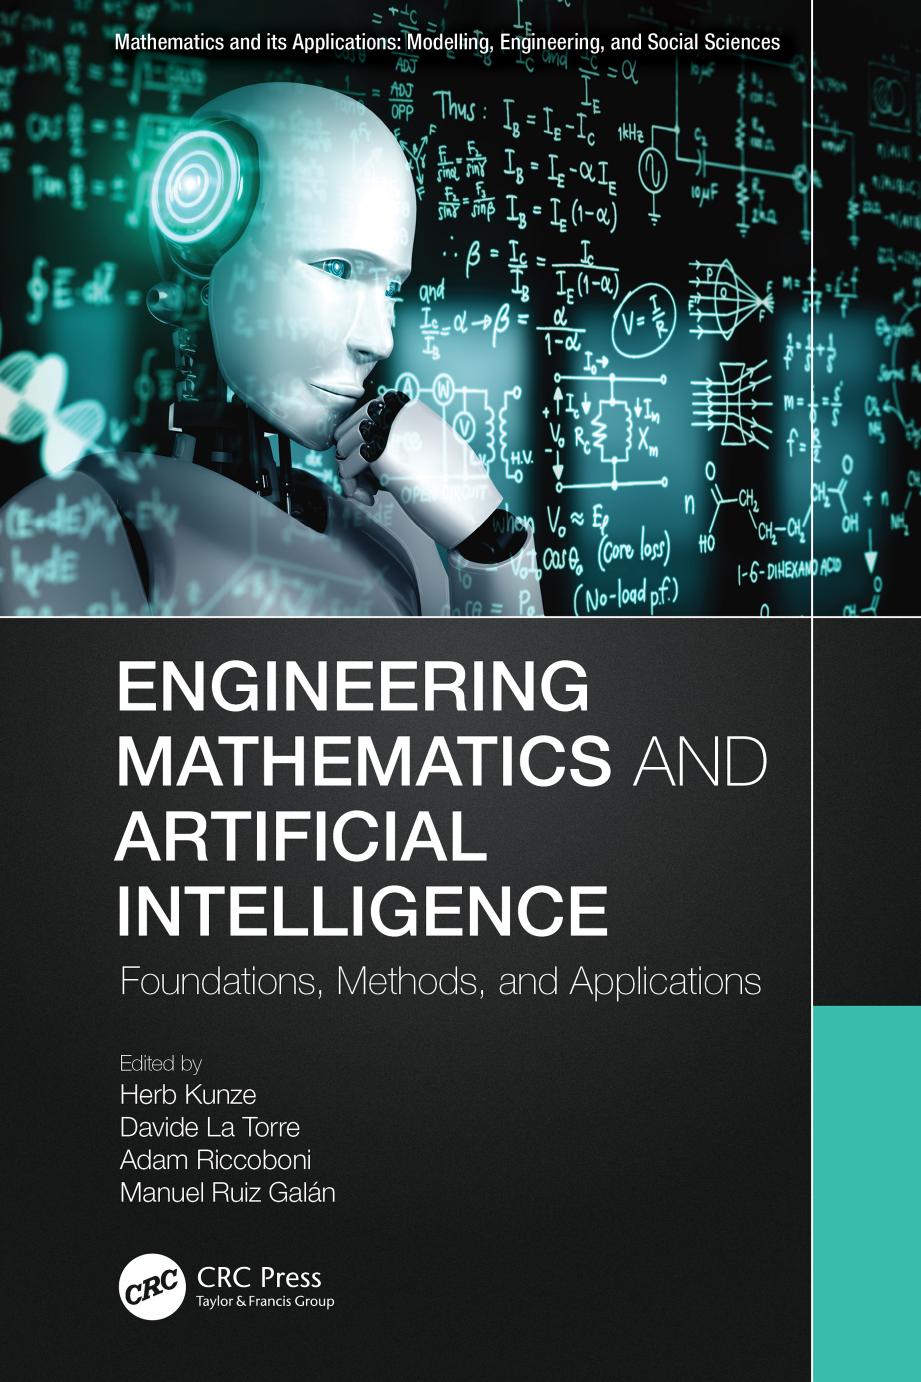 Engineering Mathematics and Artificial Intelligence: Foundations, Methods, and Applications by Herb Kunze & Davide La Torre & Adam Riccoboni & Manuel Ruiz Galán